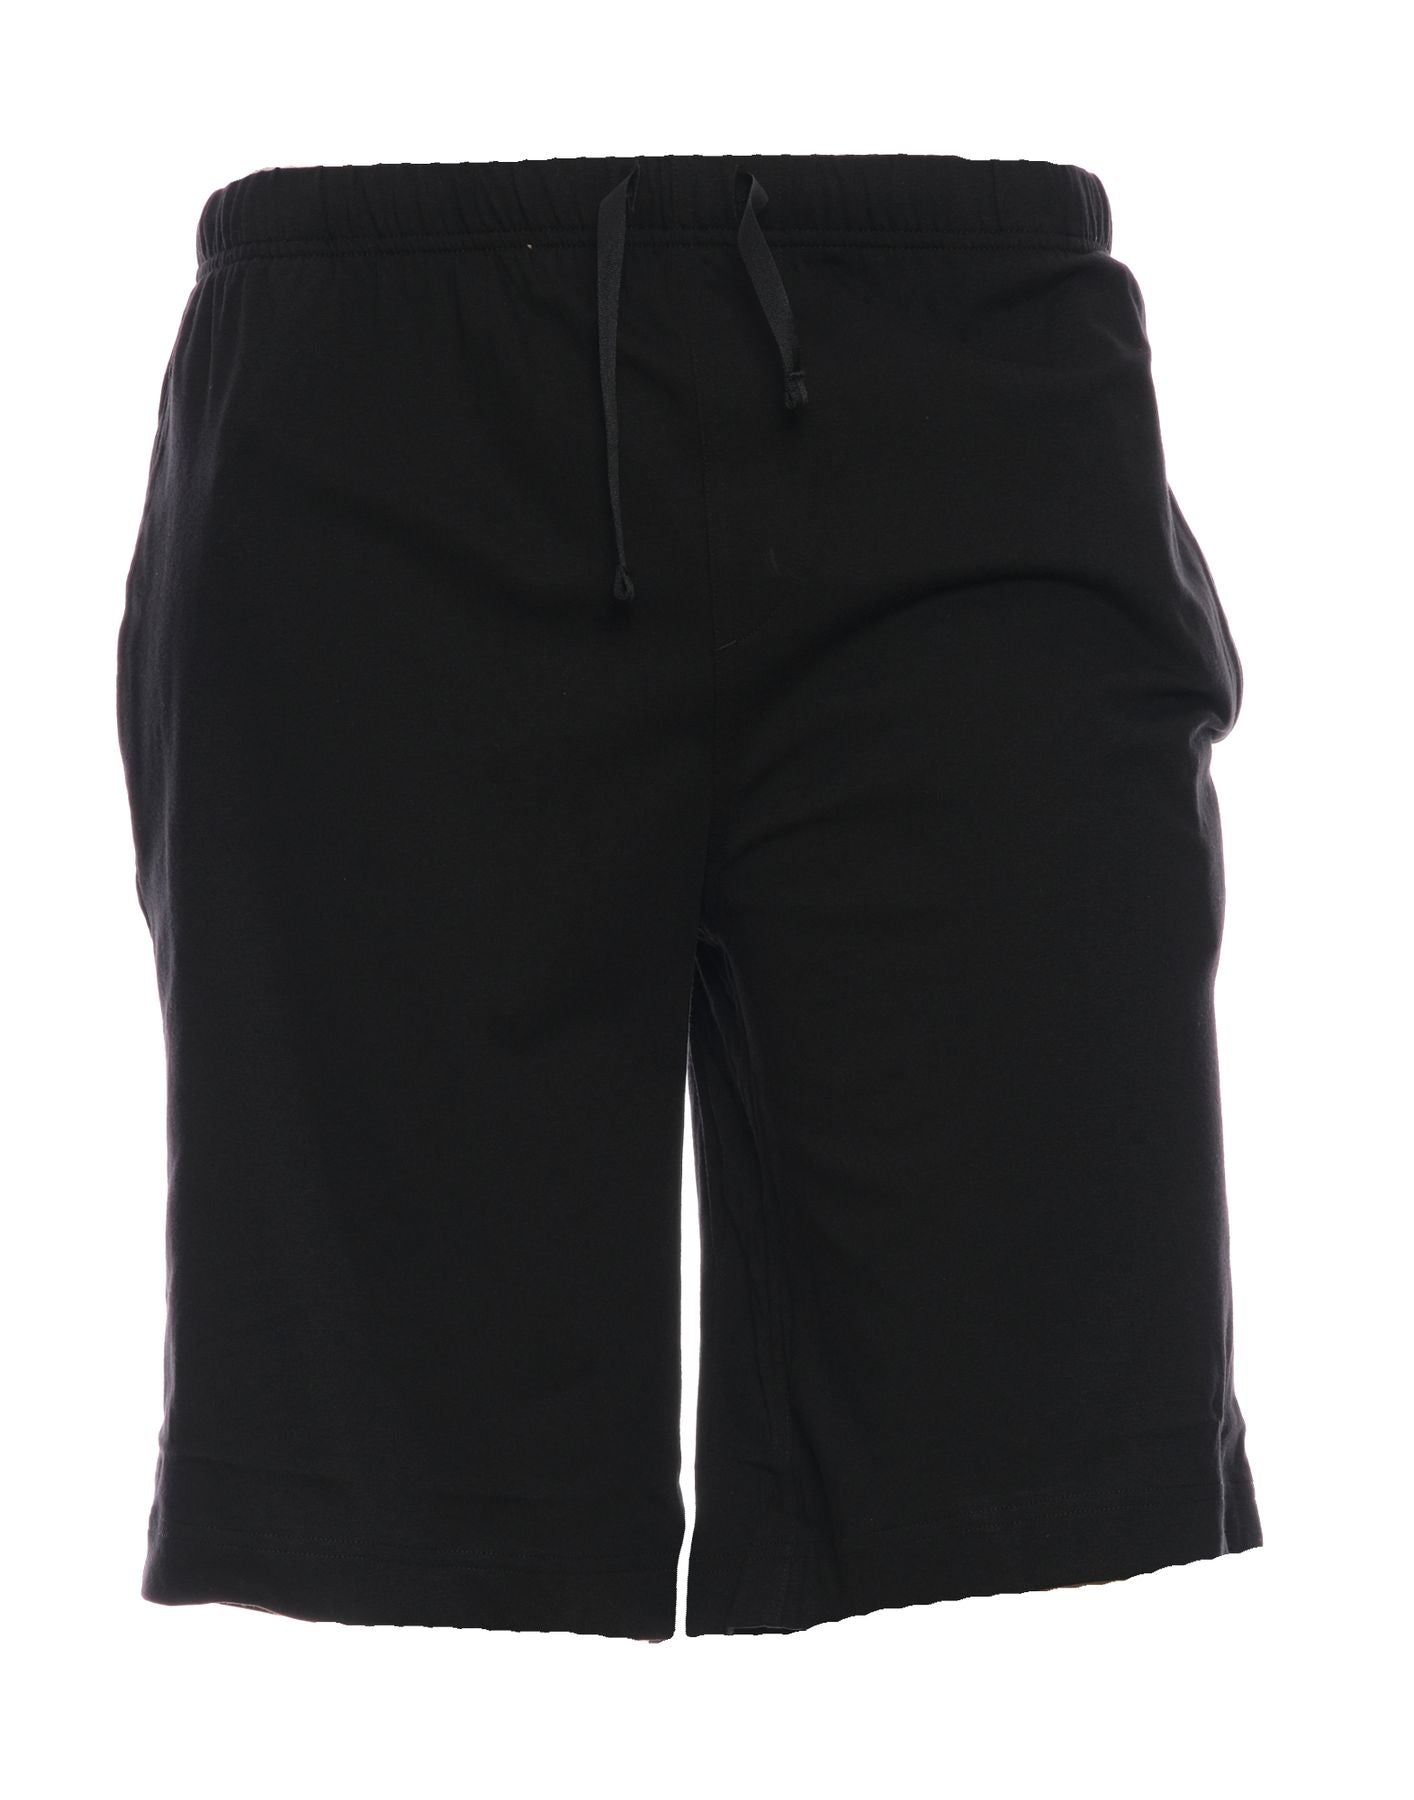 Shorts for man 714844761002 BLACK Polo Ralph Lauren